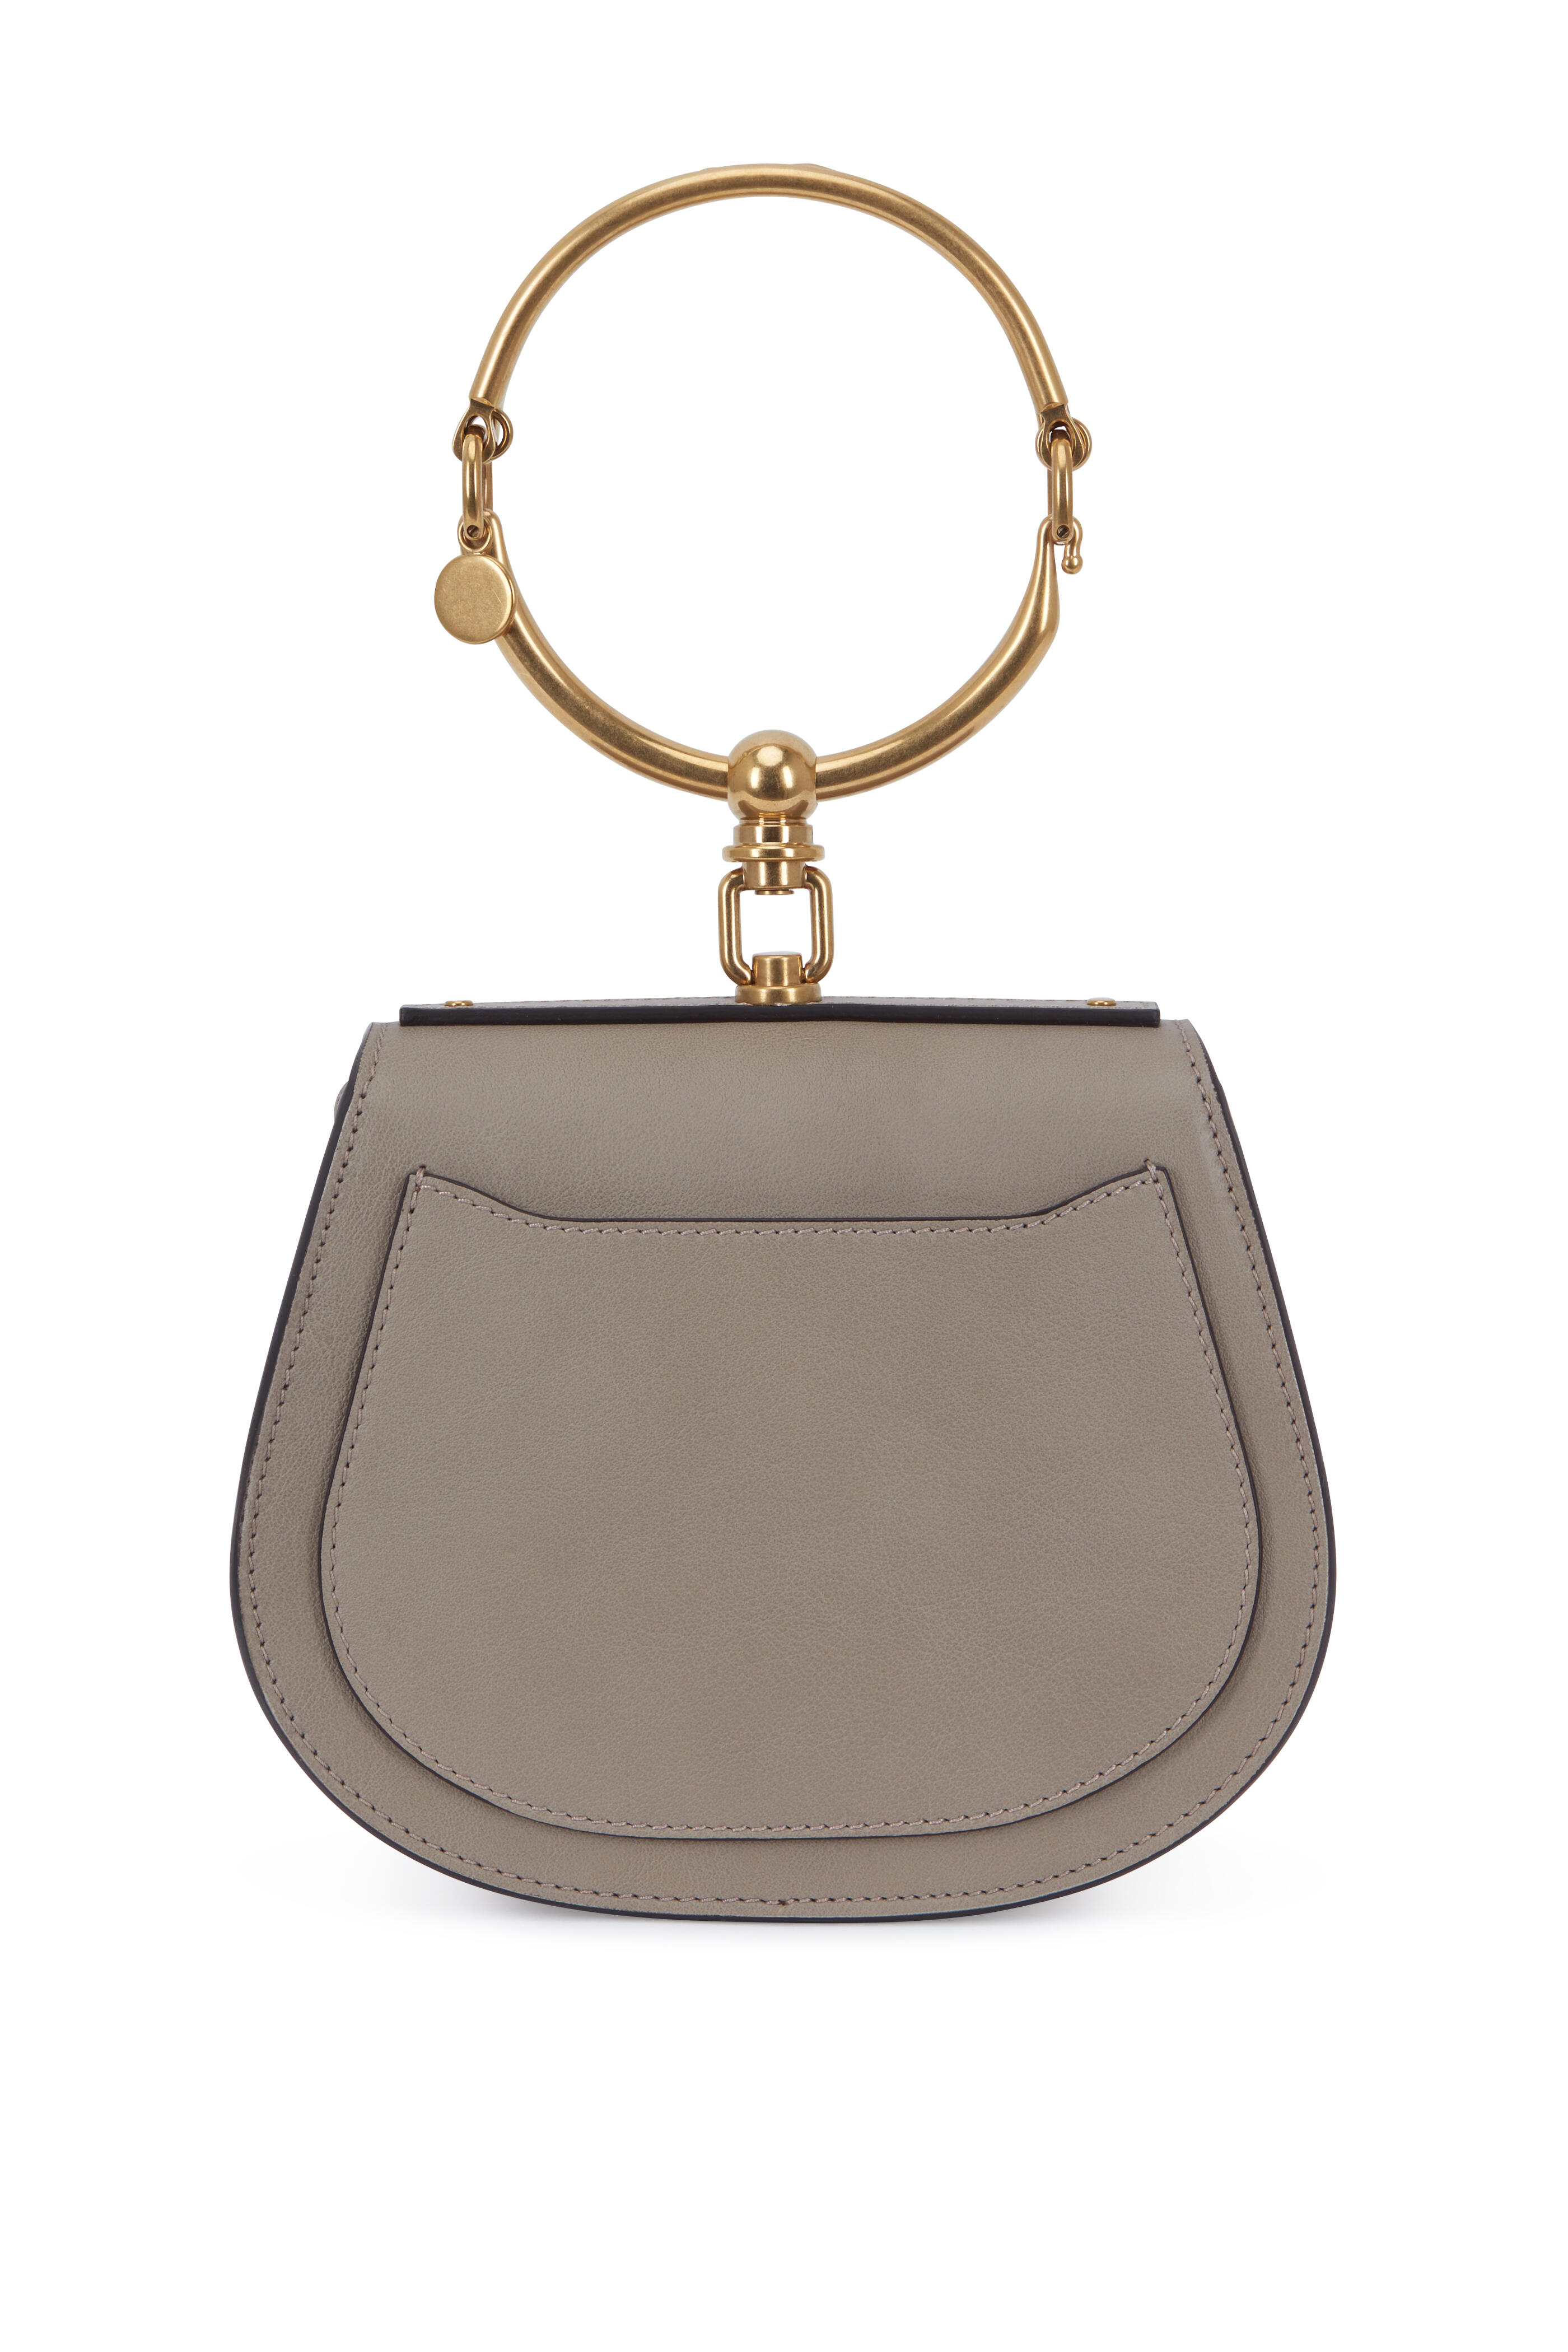 Chloé Motty Gray Nile Bracelet Leather Crossbody Bag, Best Price and  Reviews